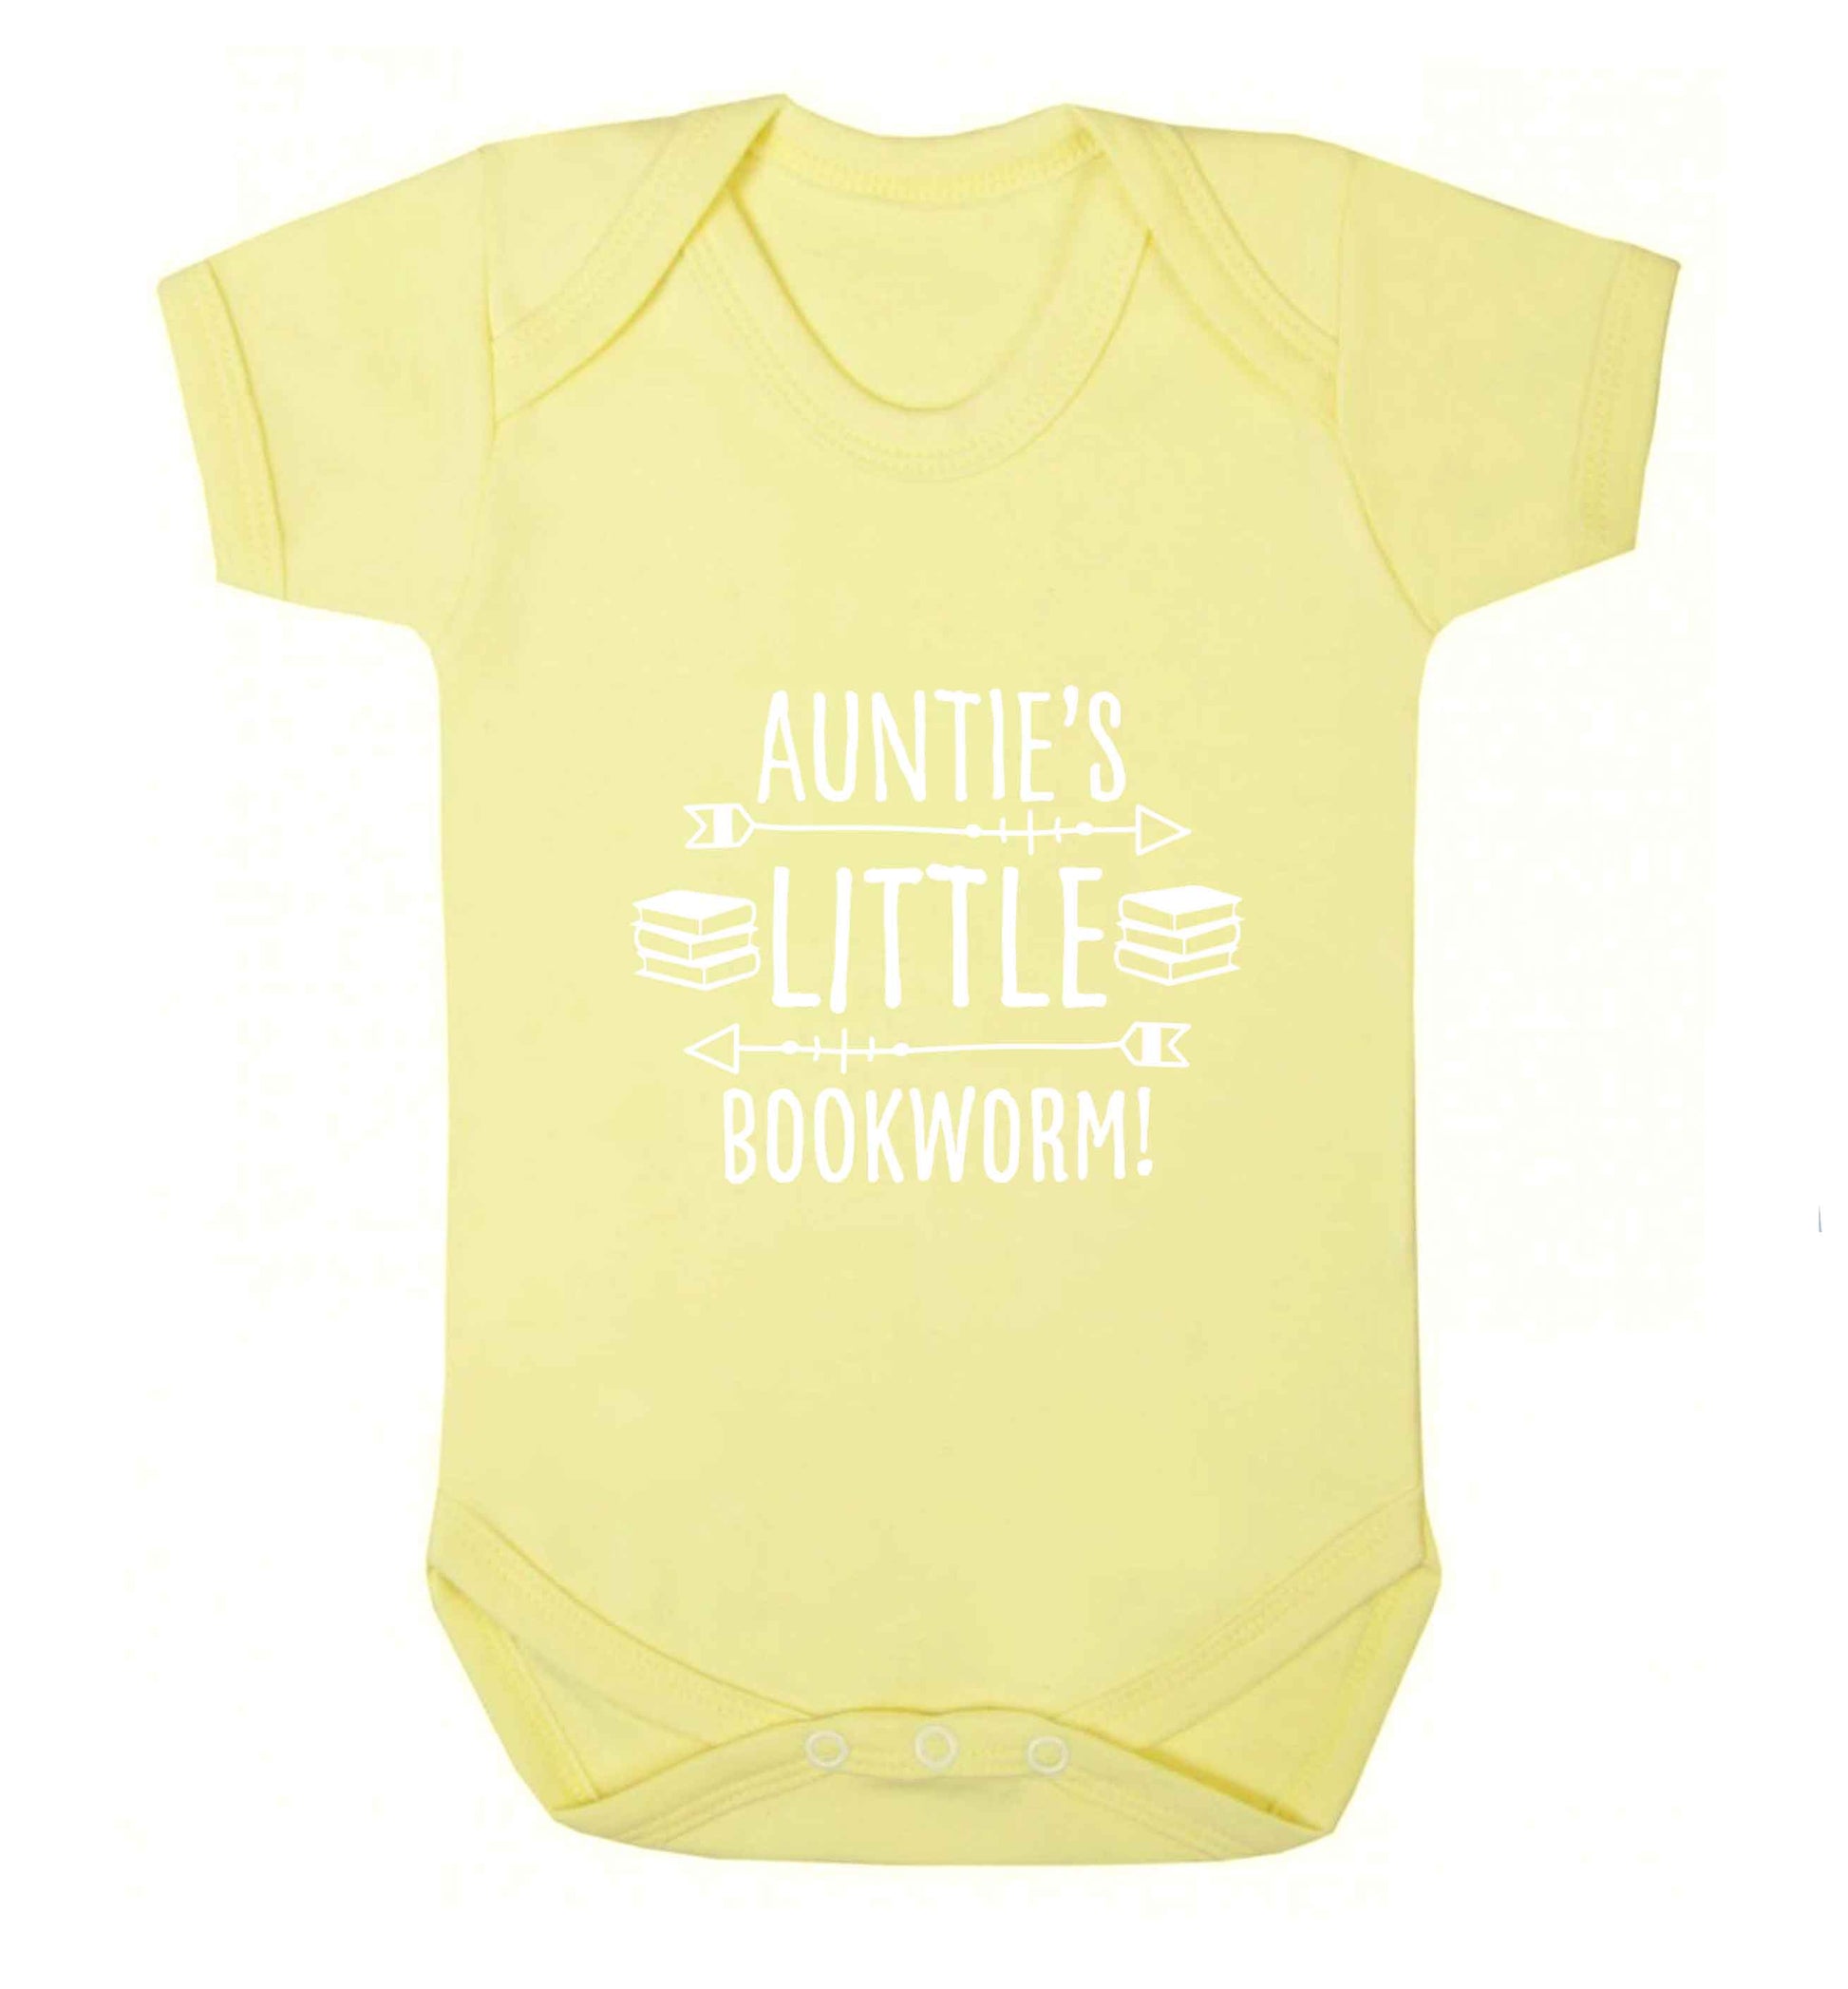 Auntie's little bookworm baby vest pale yellow 18-24 months